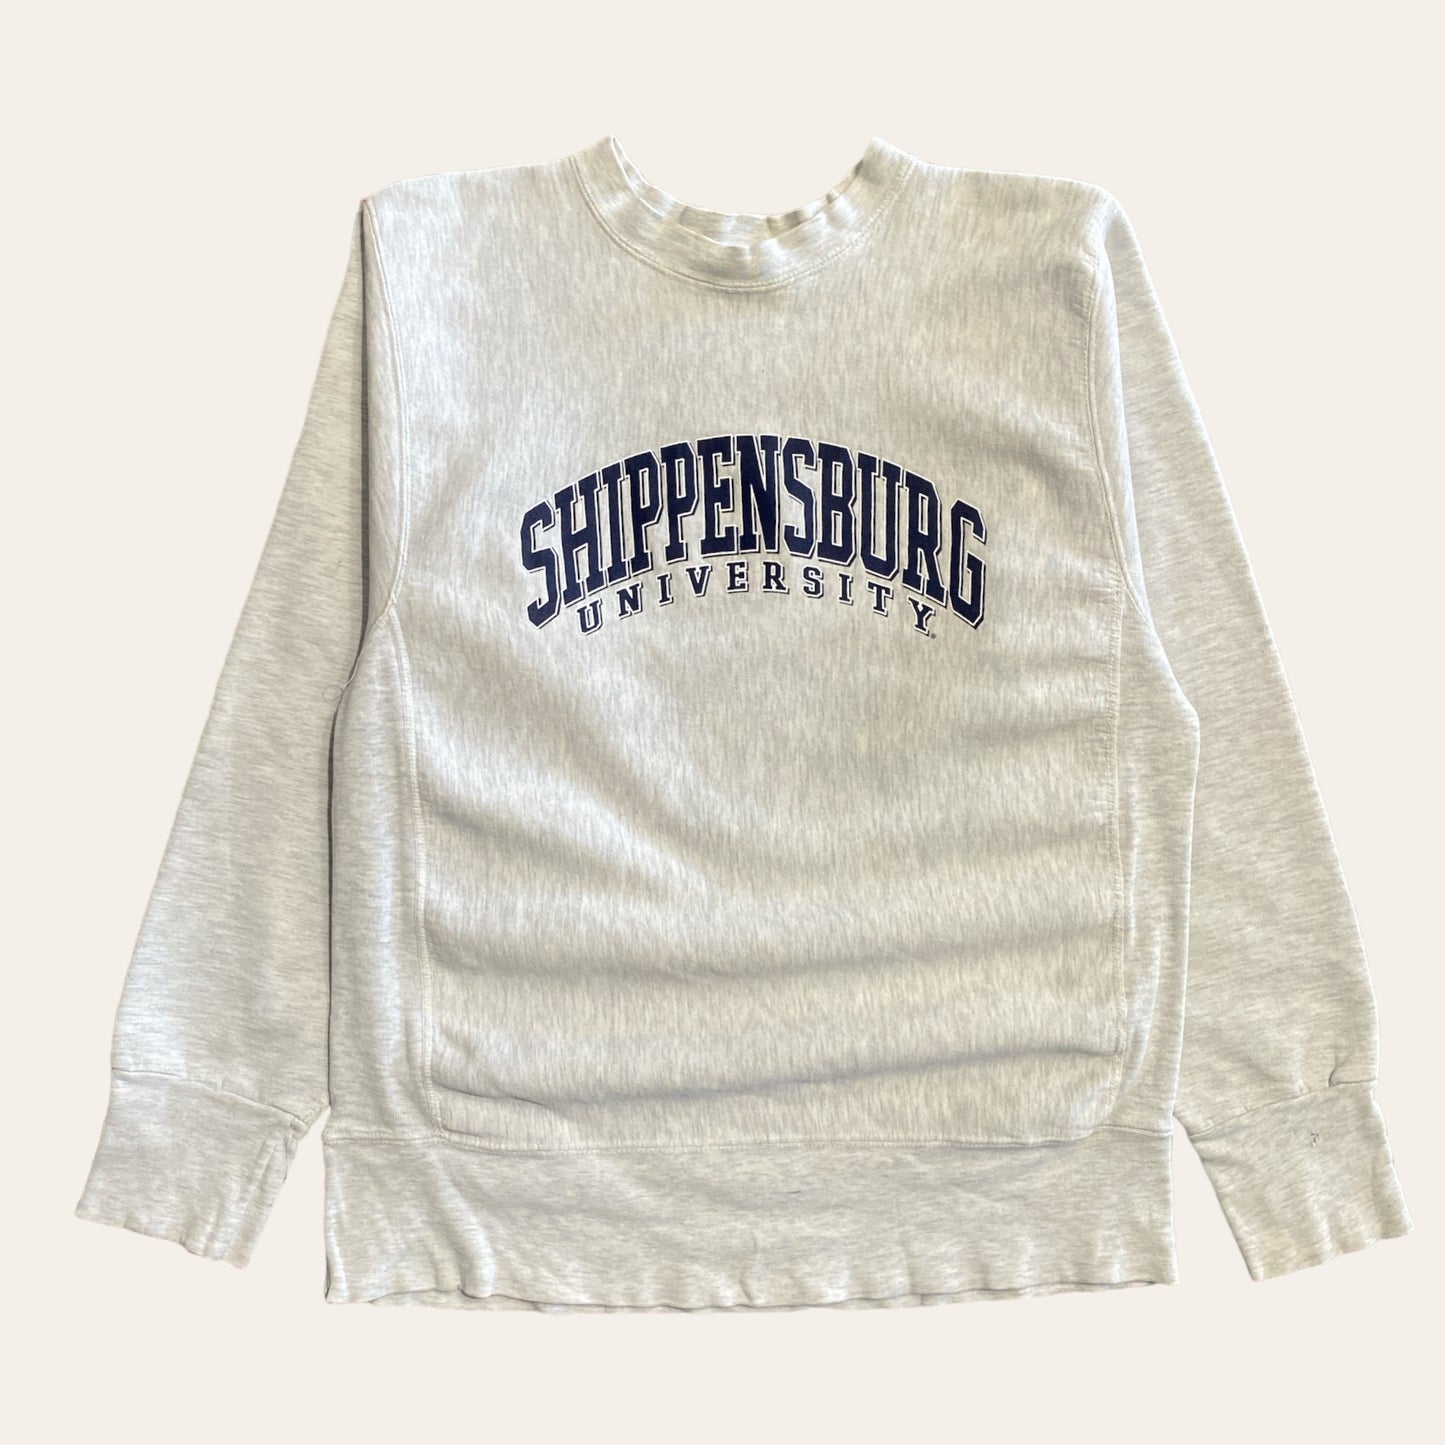 Vintage Shippensburg University Sweater